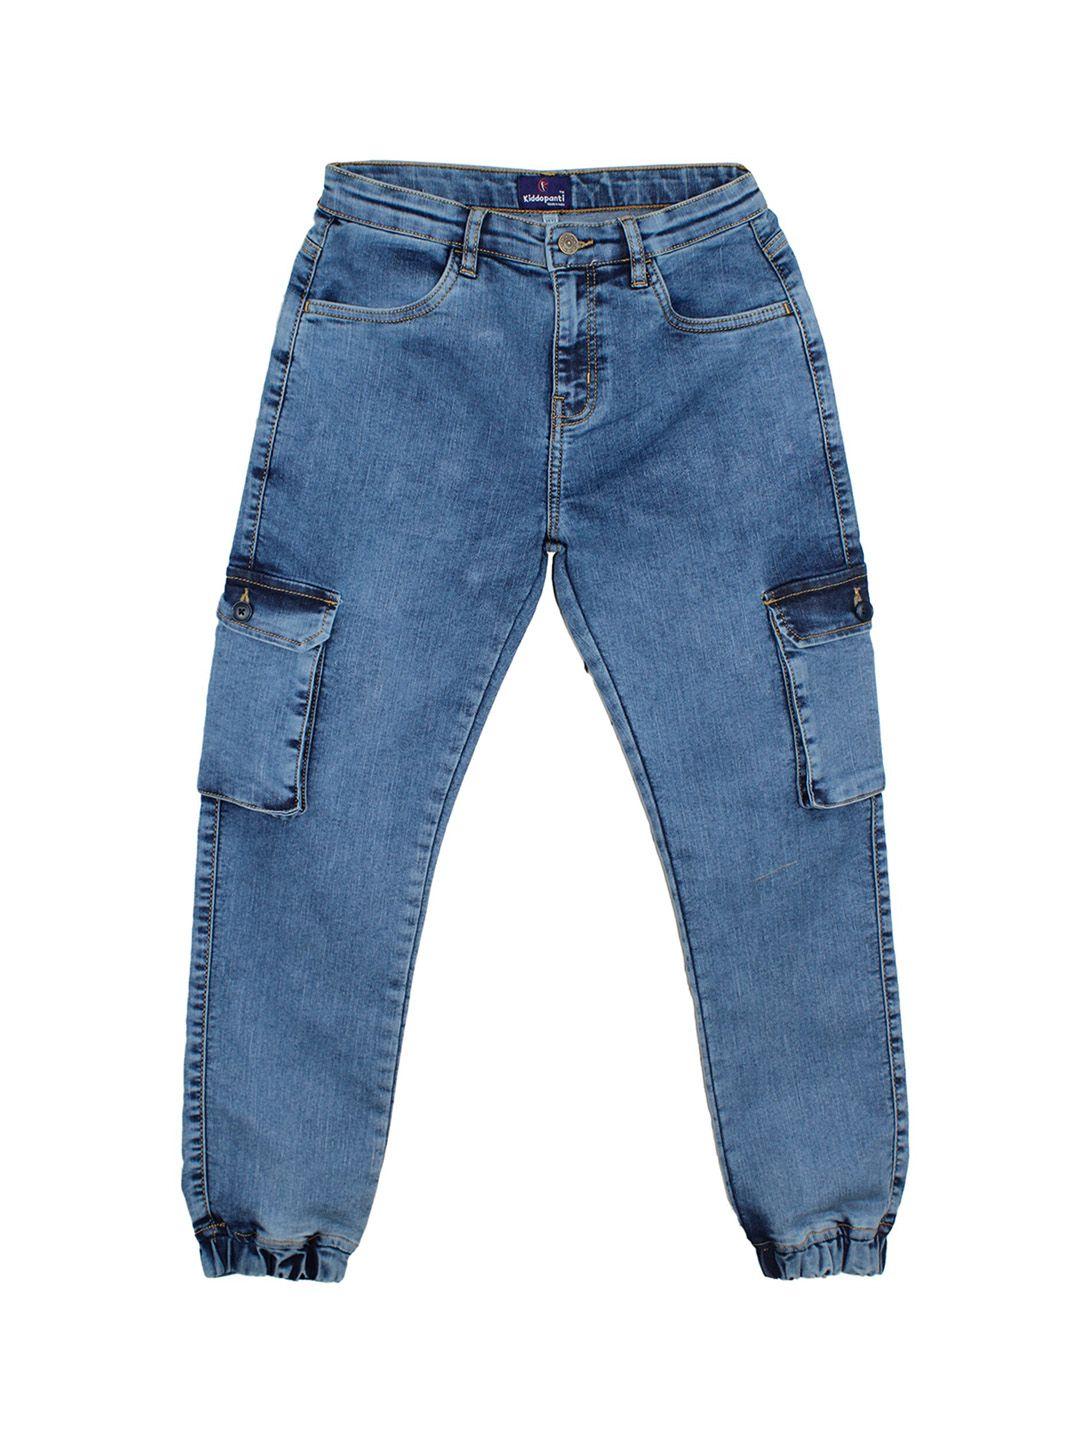 kiddopanti boys jean clean look stretchable jeans